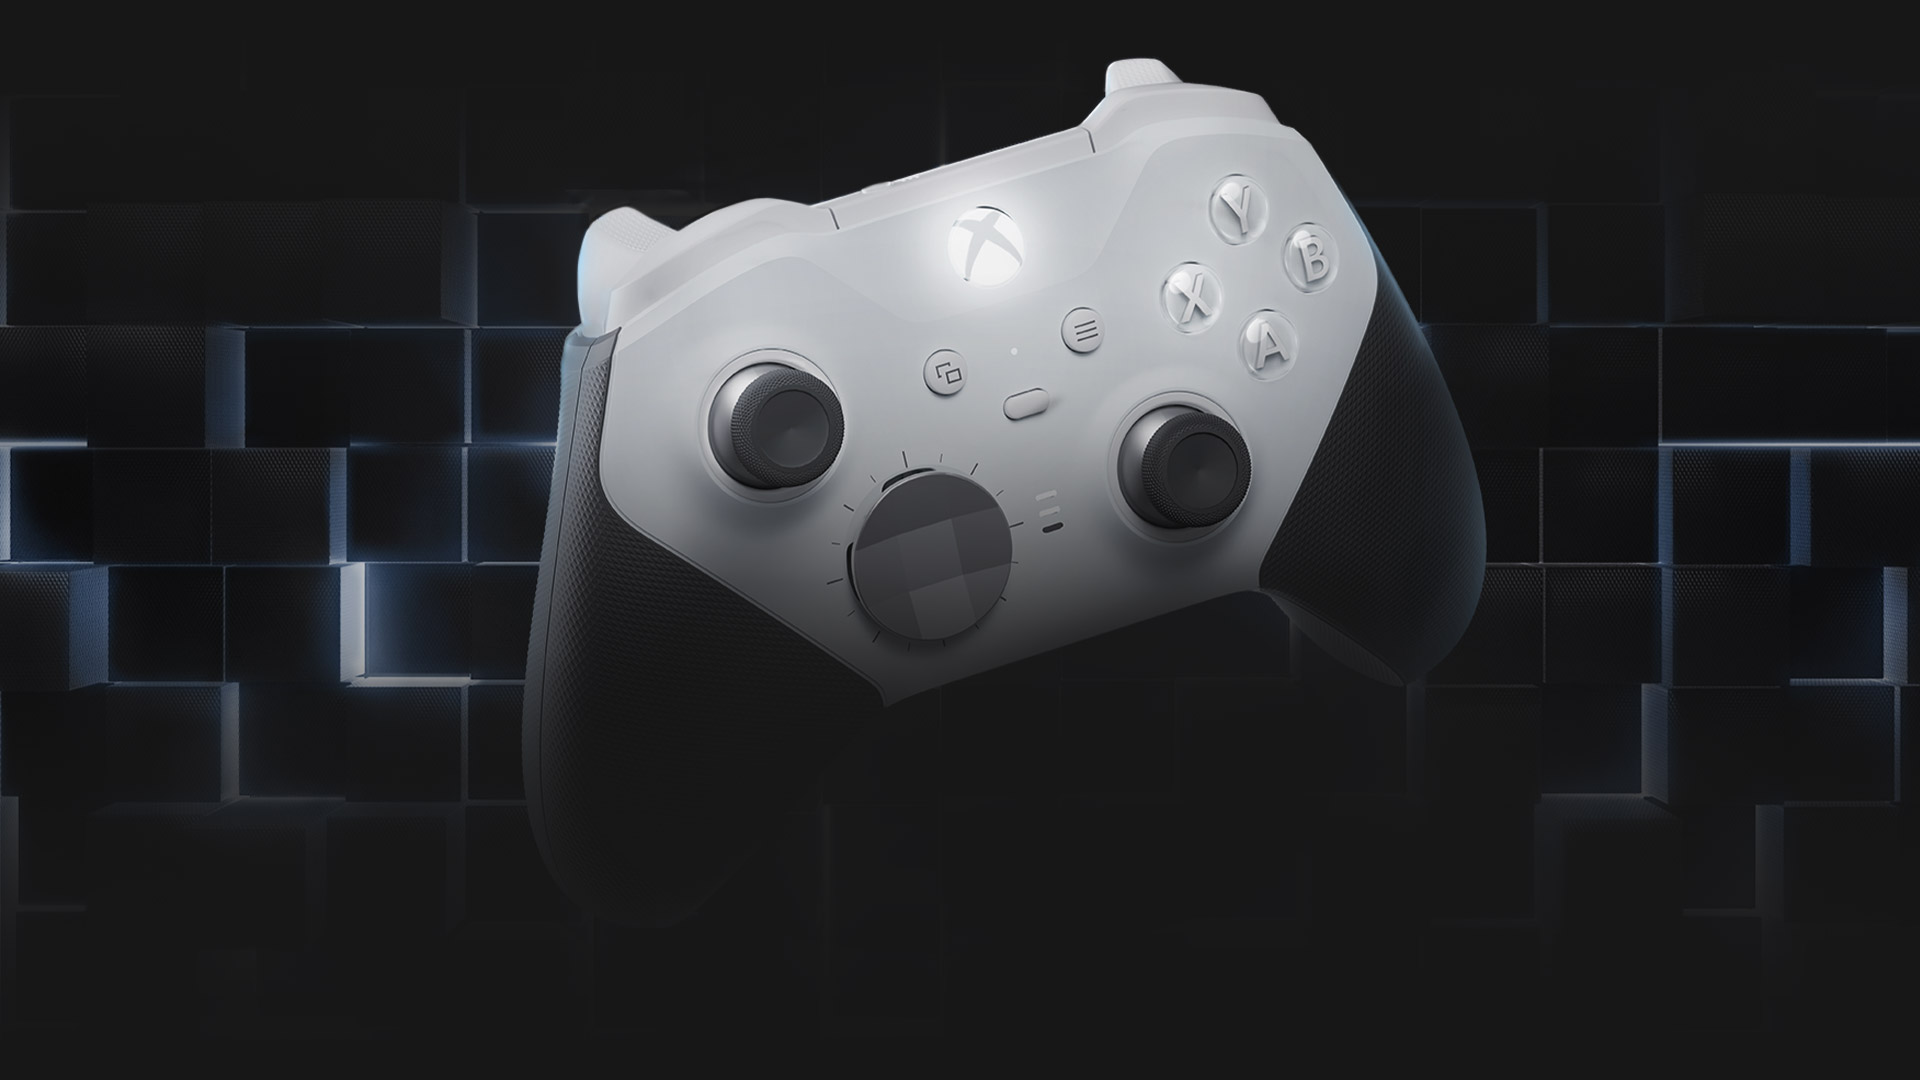 Xbox Elite 無線控制器系列 2 – CORE 控制器在立方體背景前。